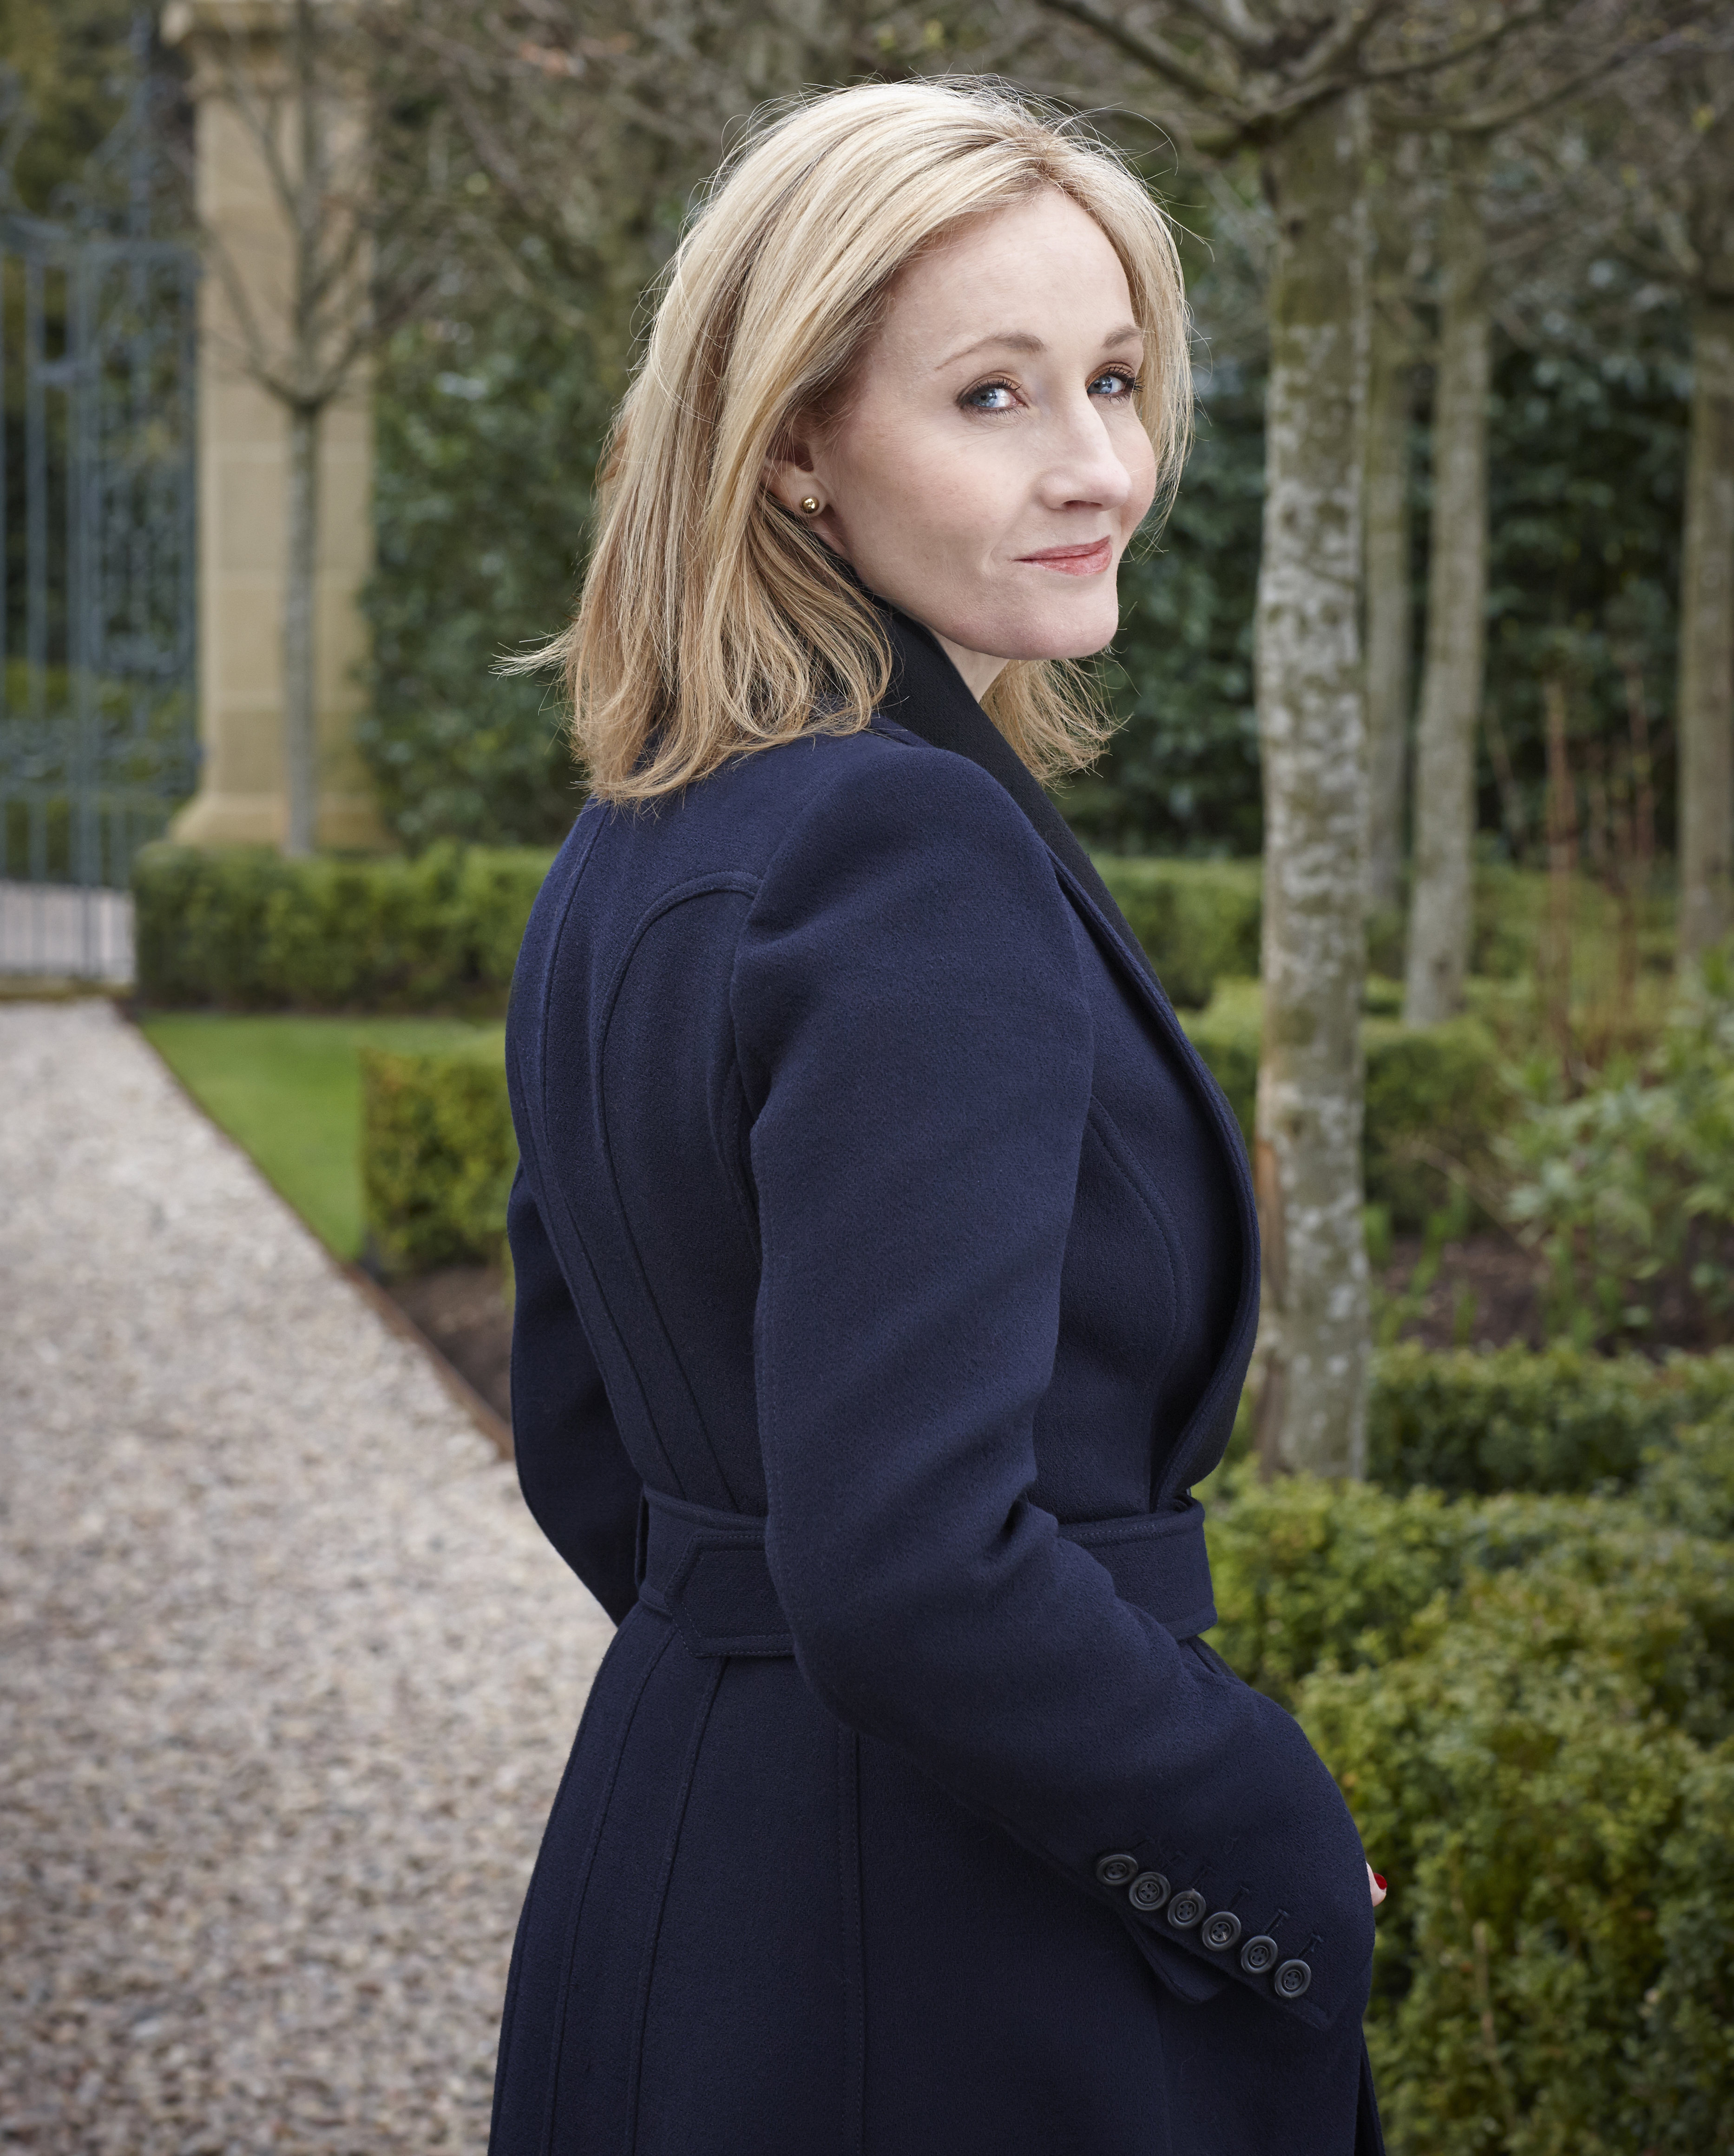 J.K. Rowling photo outdoors